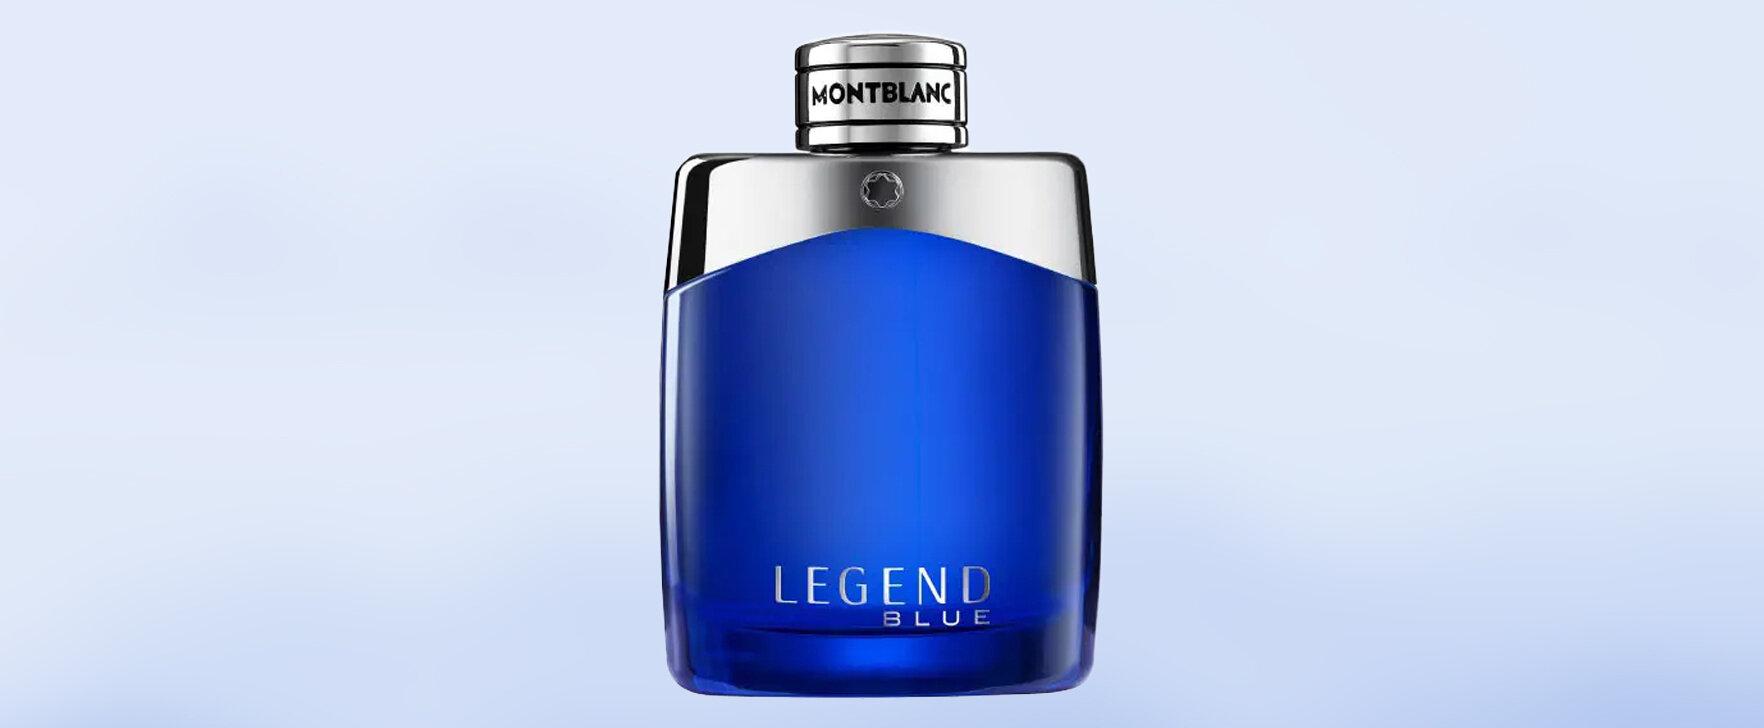 Elegant, Modern and Masculine: The New Legend Blue Eau de Parfum From Montblanc